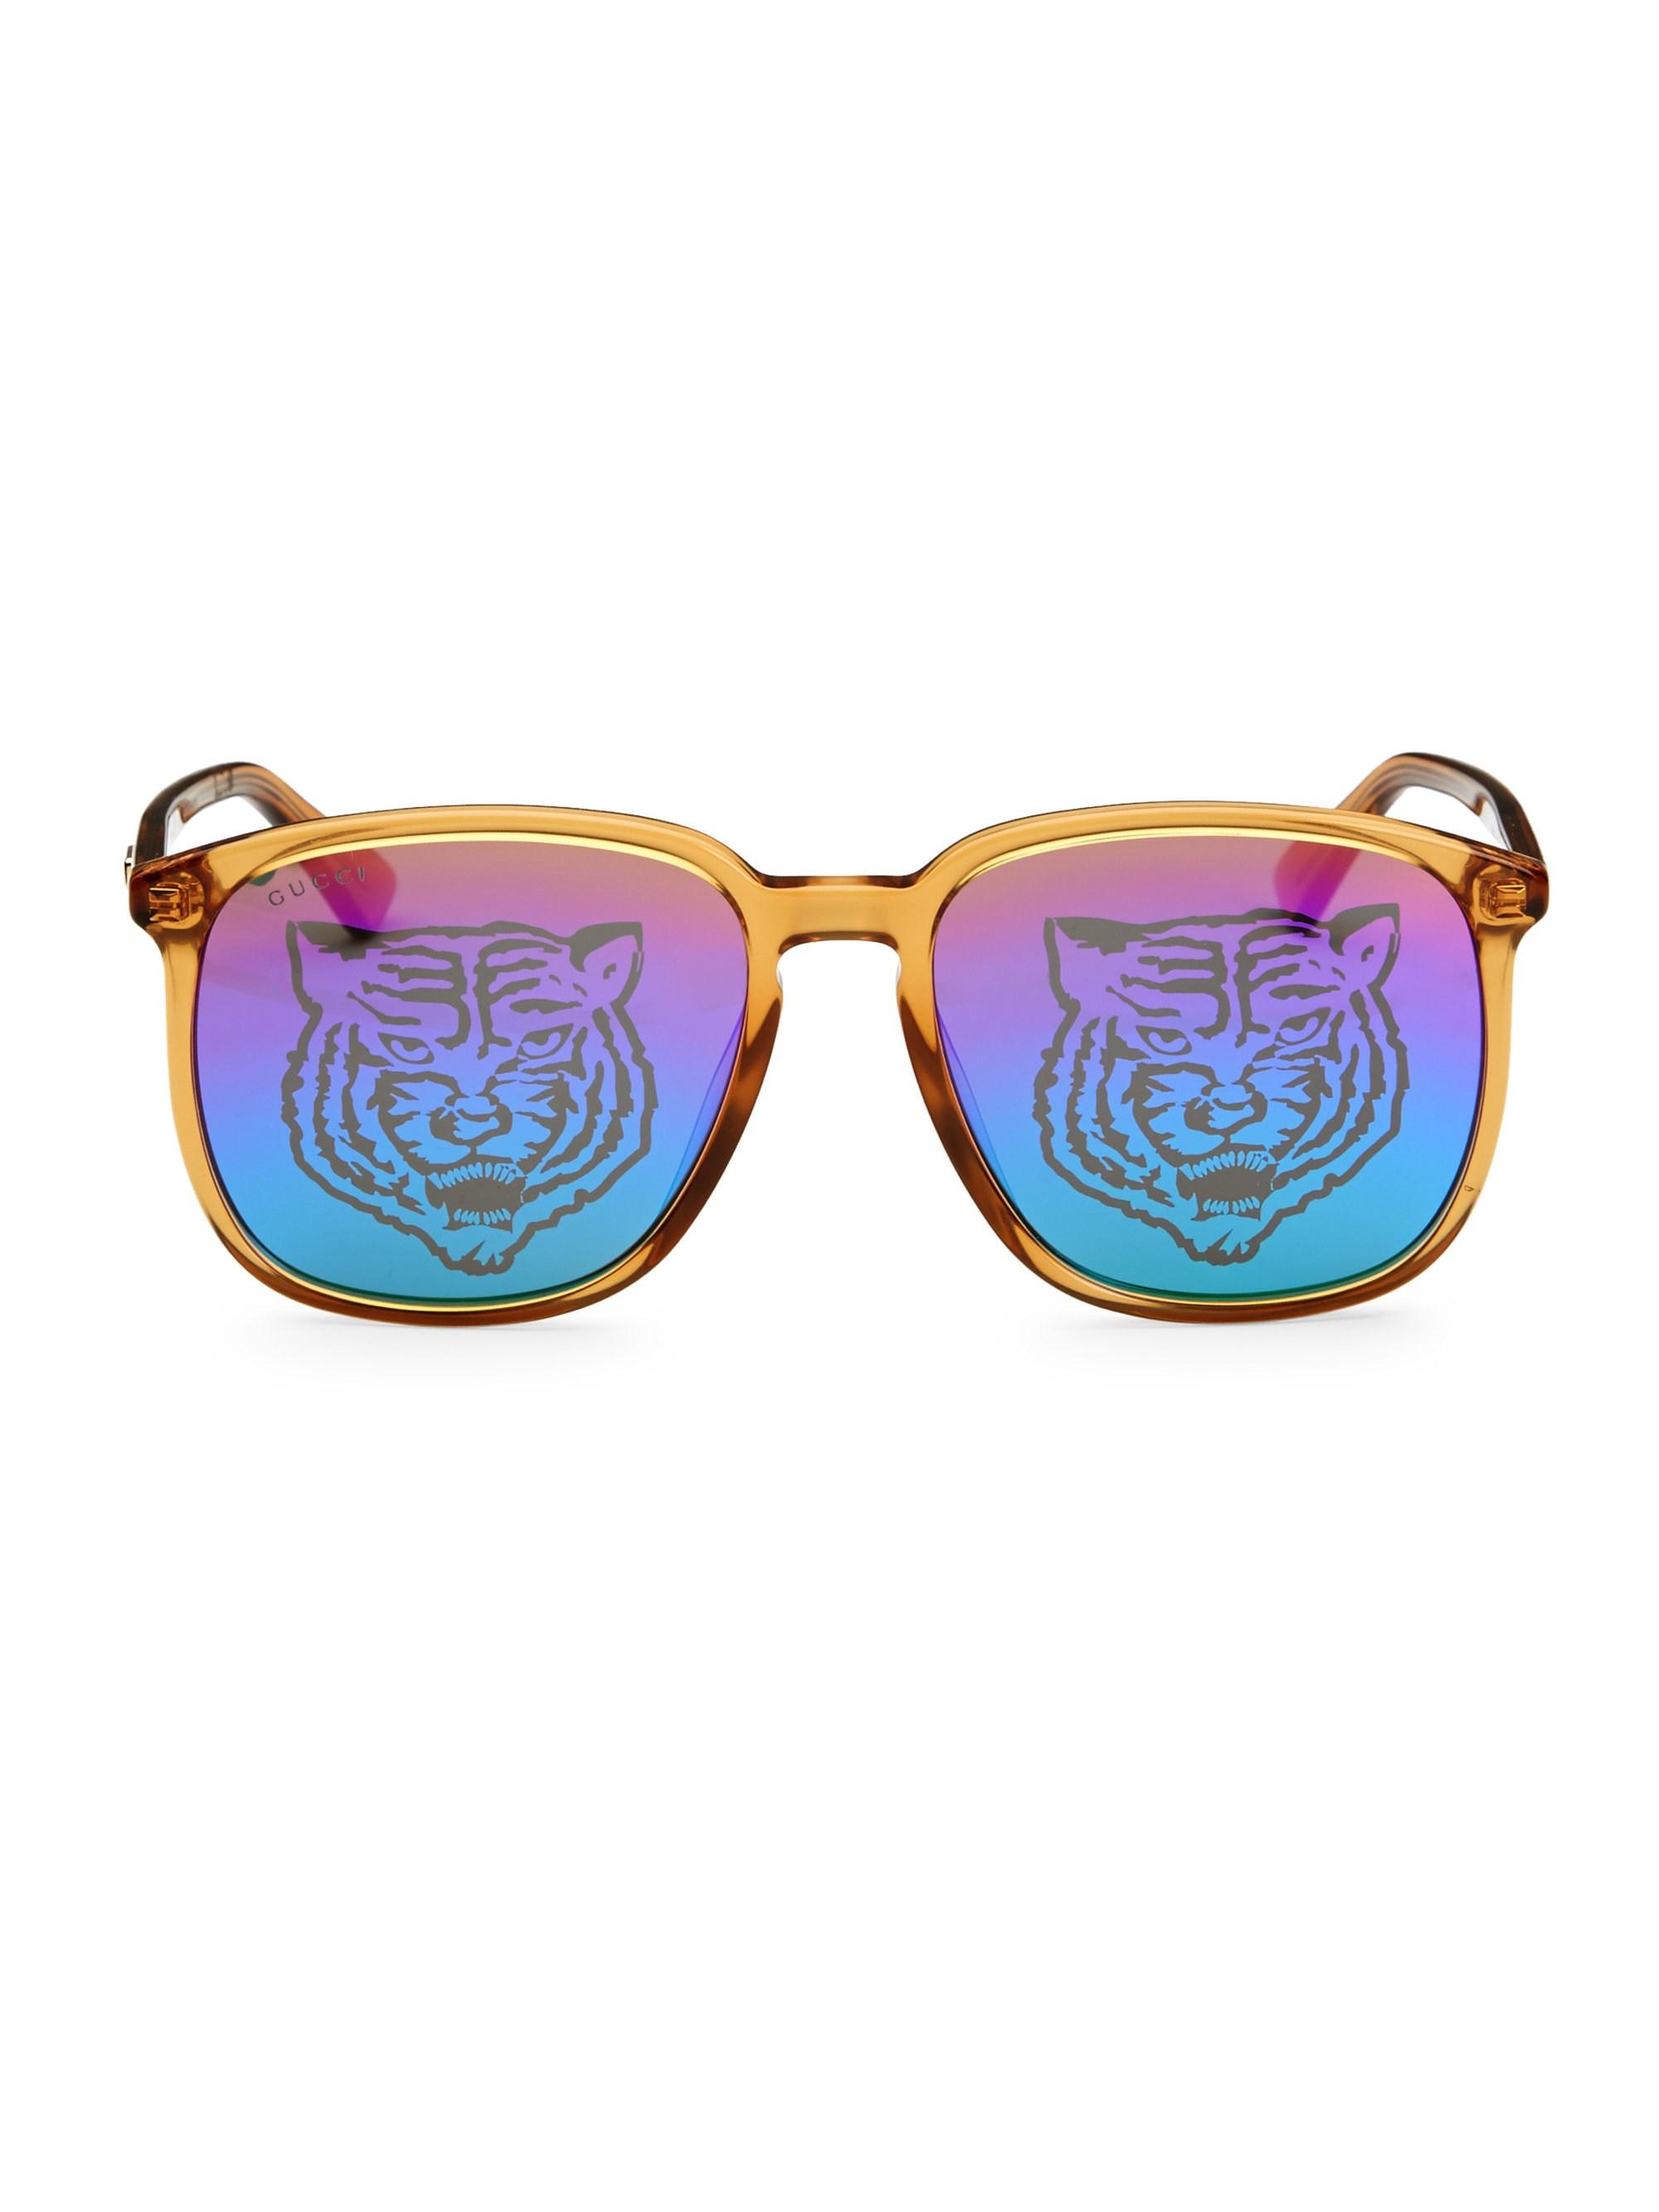 Gucci 145mm Tiger Lens Sunglasses in Beige (Natural) for Men - Lyst